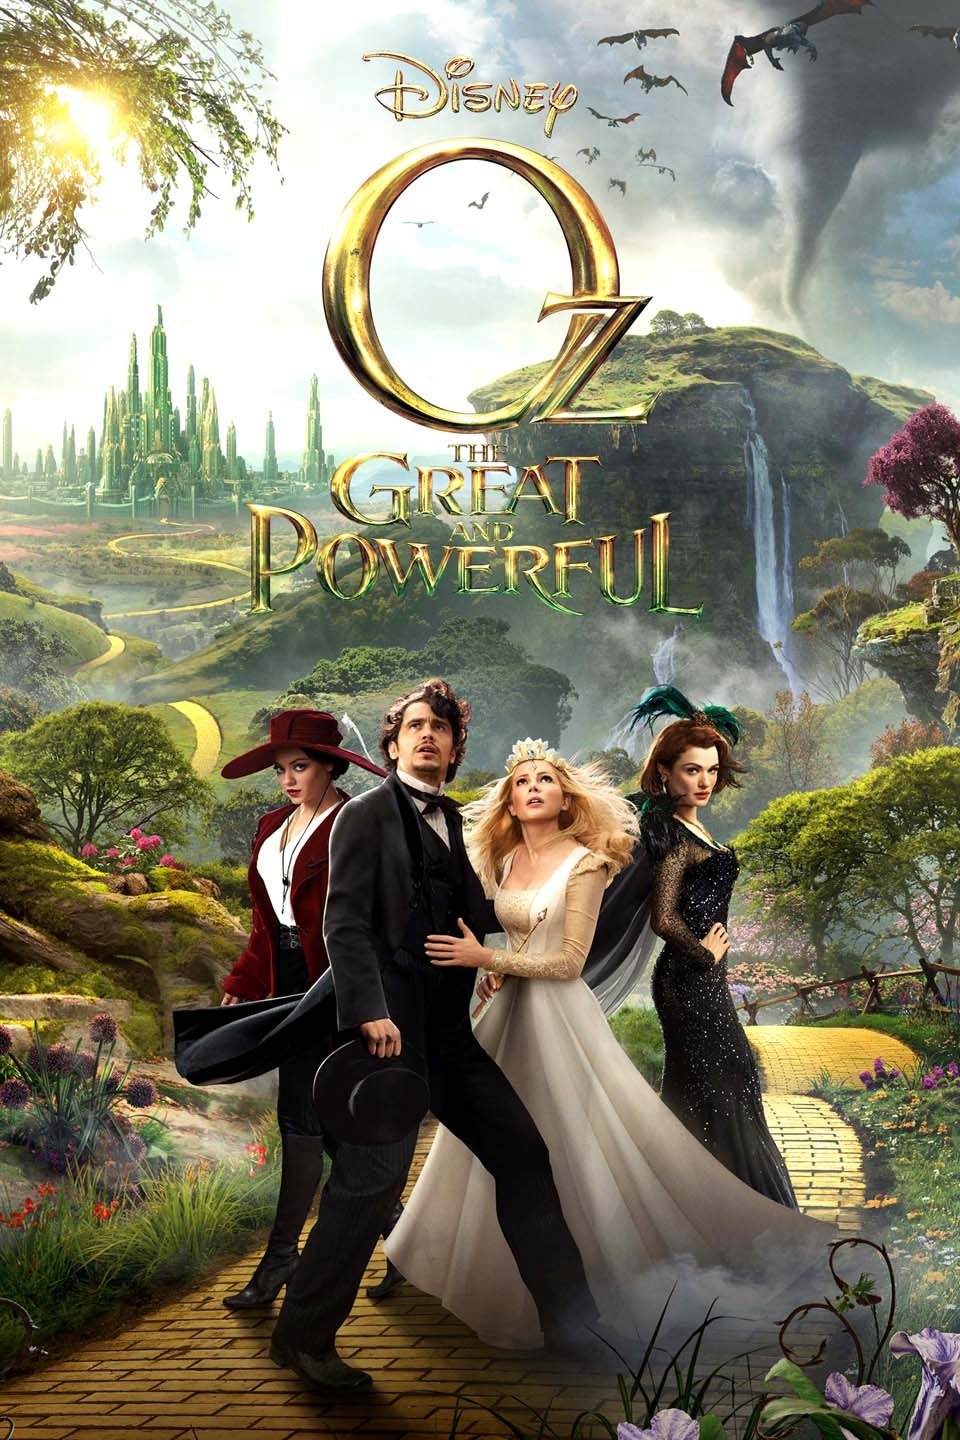 [MINI-HD] Oz the Great and Powerful (2013) ออซ มหัศจรรย์พ่อมดผู้ยิ่งใหญ่ [1080p] [พากย์ไทย DTS + เสียงไทย DTS] [บรรยายไทย + อังกฤษ] [เสียงไทย + ซับไทย] [PANDAFILE]